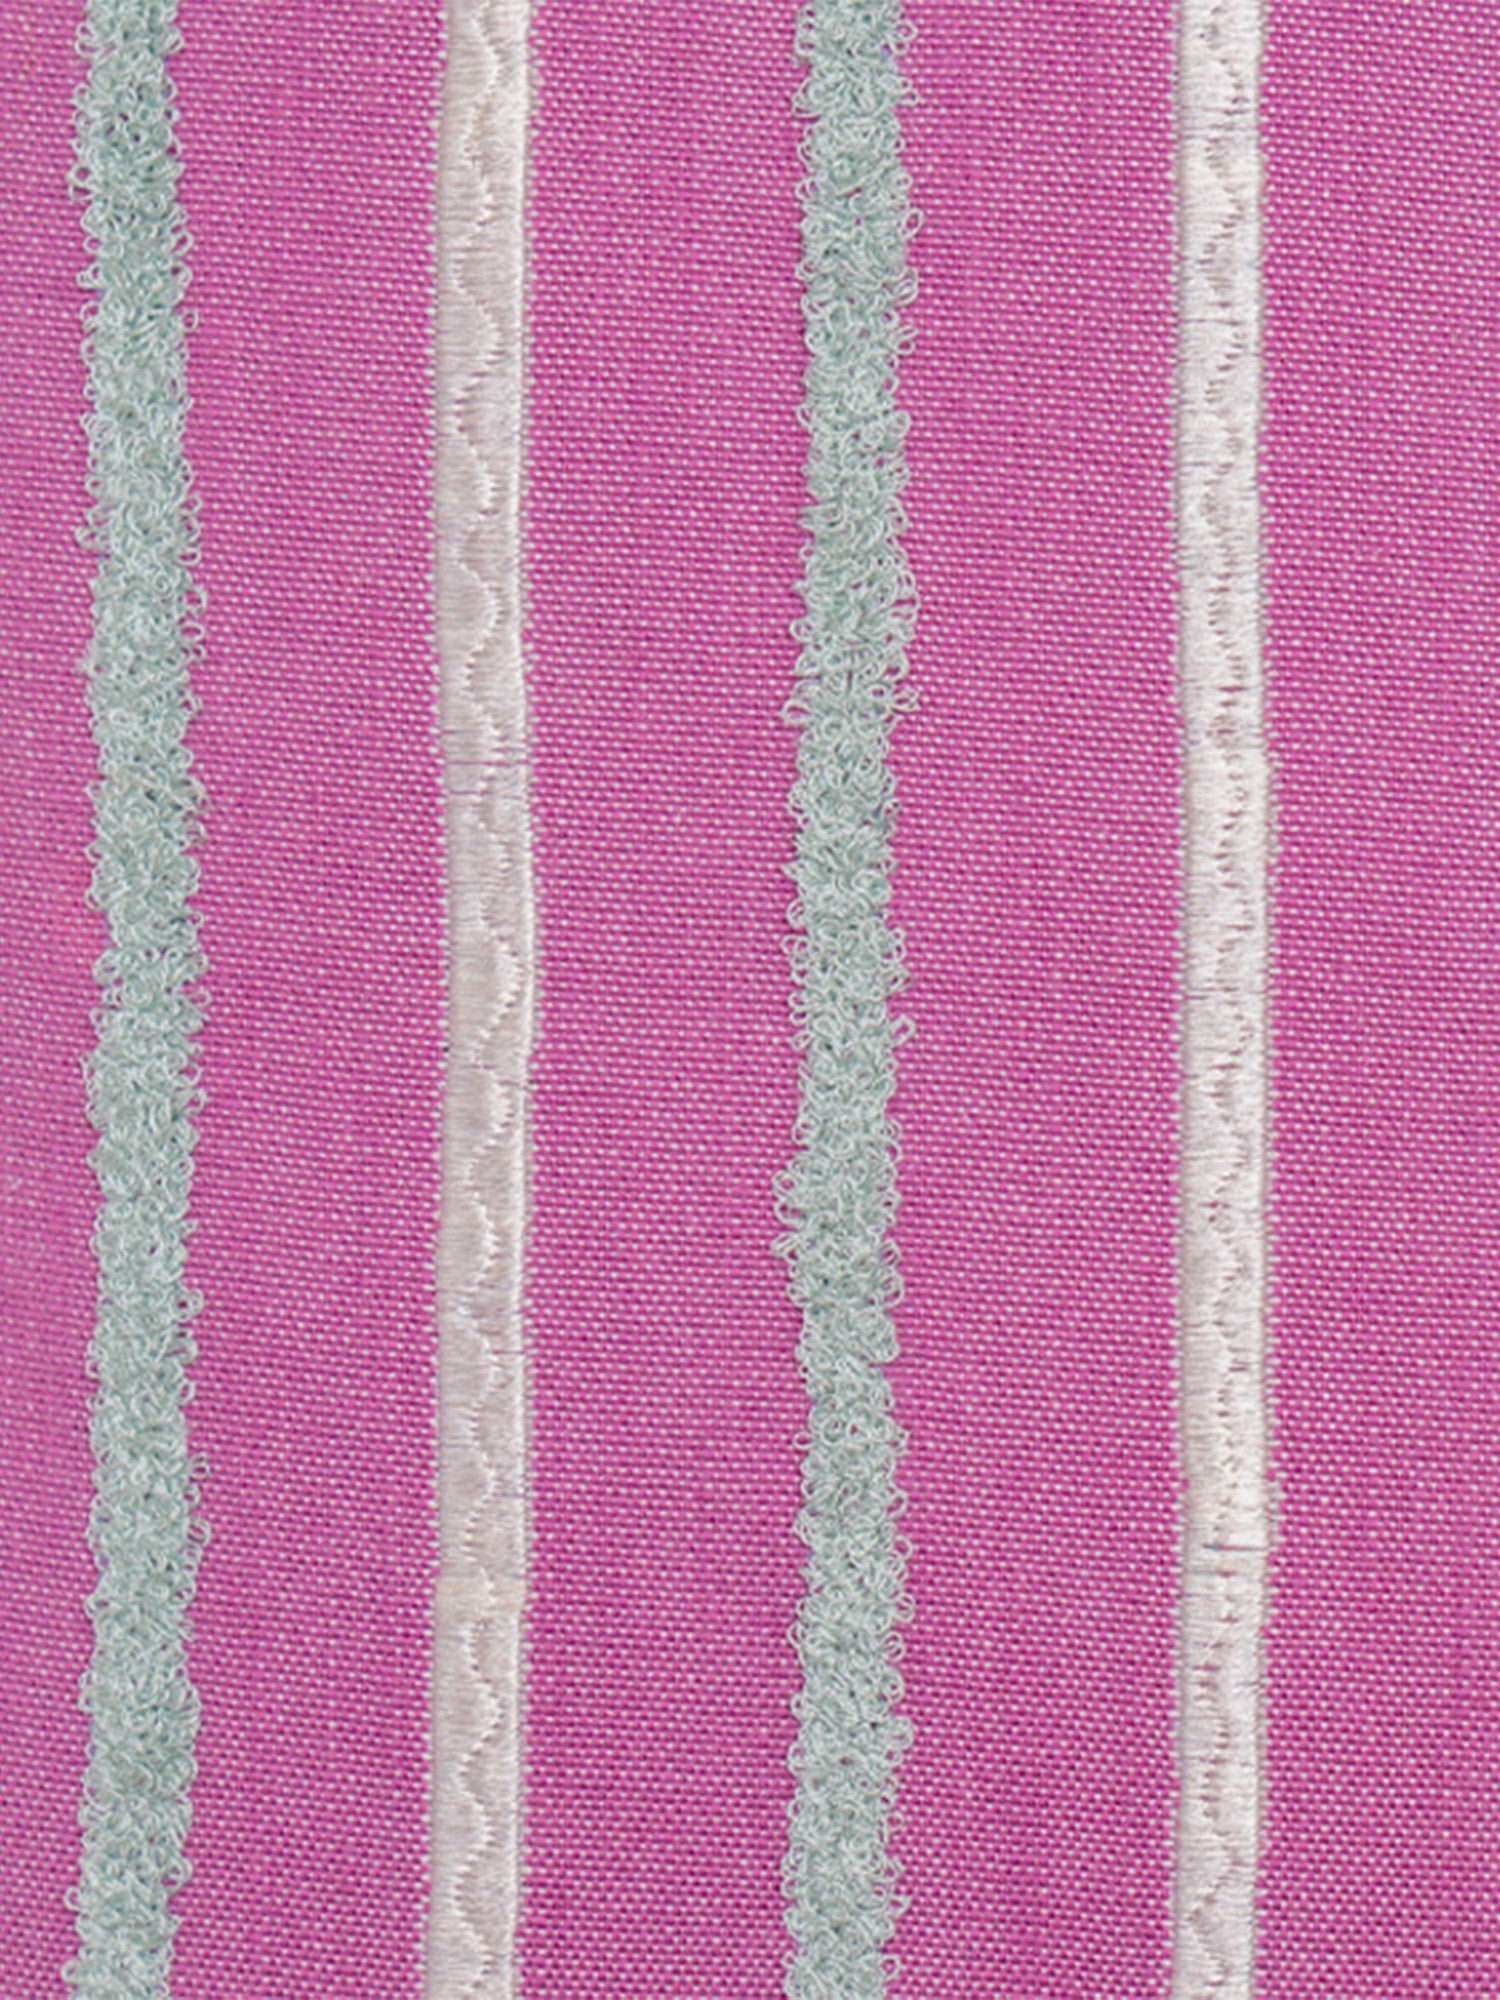 Cotton Blend Striped Plum Cushion Cover - 16"X16"